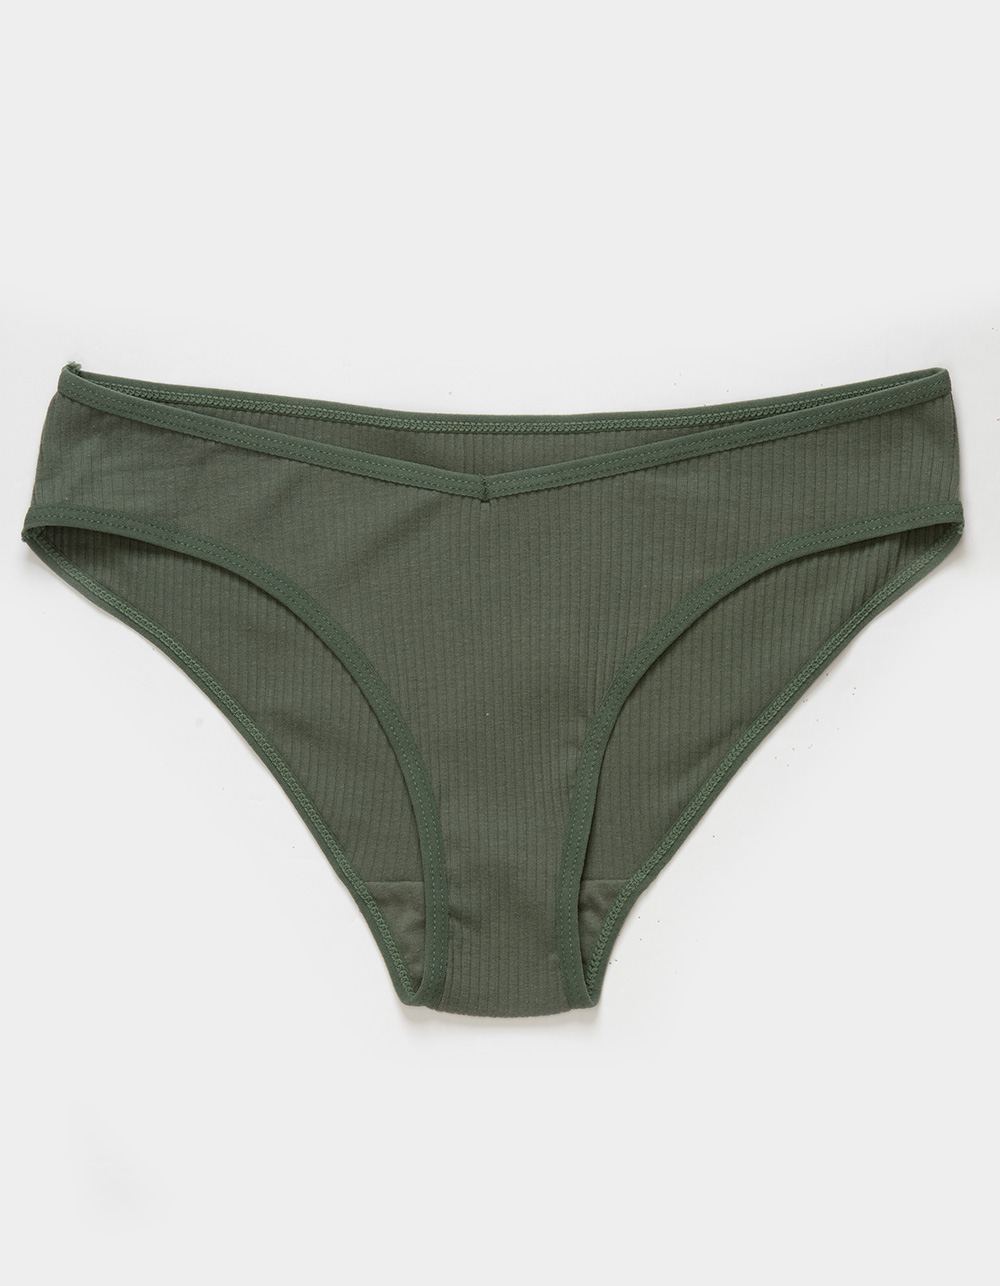 ASEIDFNSA Lady T Shaped Bottom Opening Crotch Underpants Women Underwear  Floral Lace Underwear Pantys Lingerie Briefs Black XL